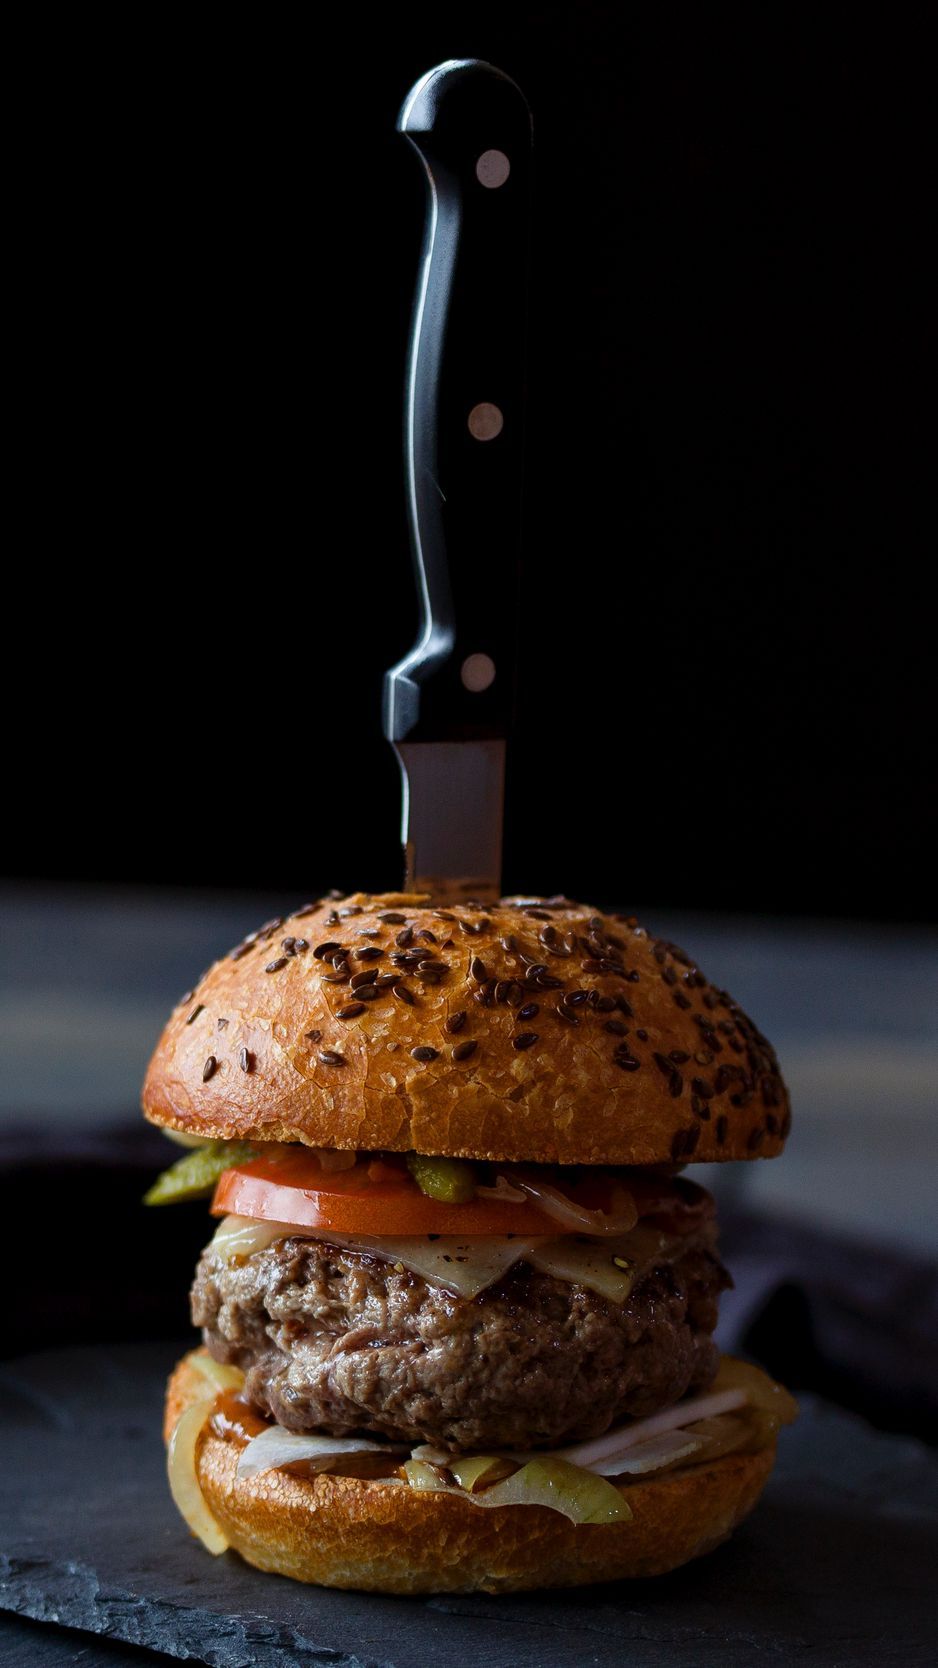 Download wallpaper 938x1668 burger, hamburger, buns, meat, knife